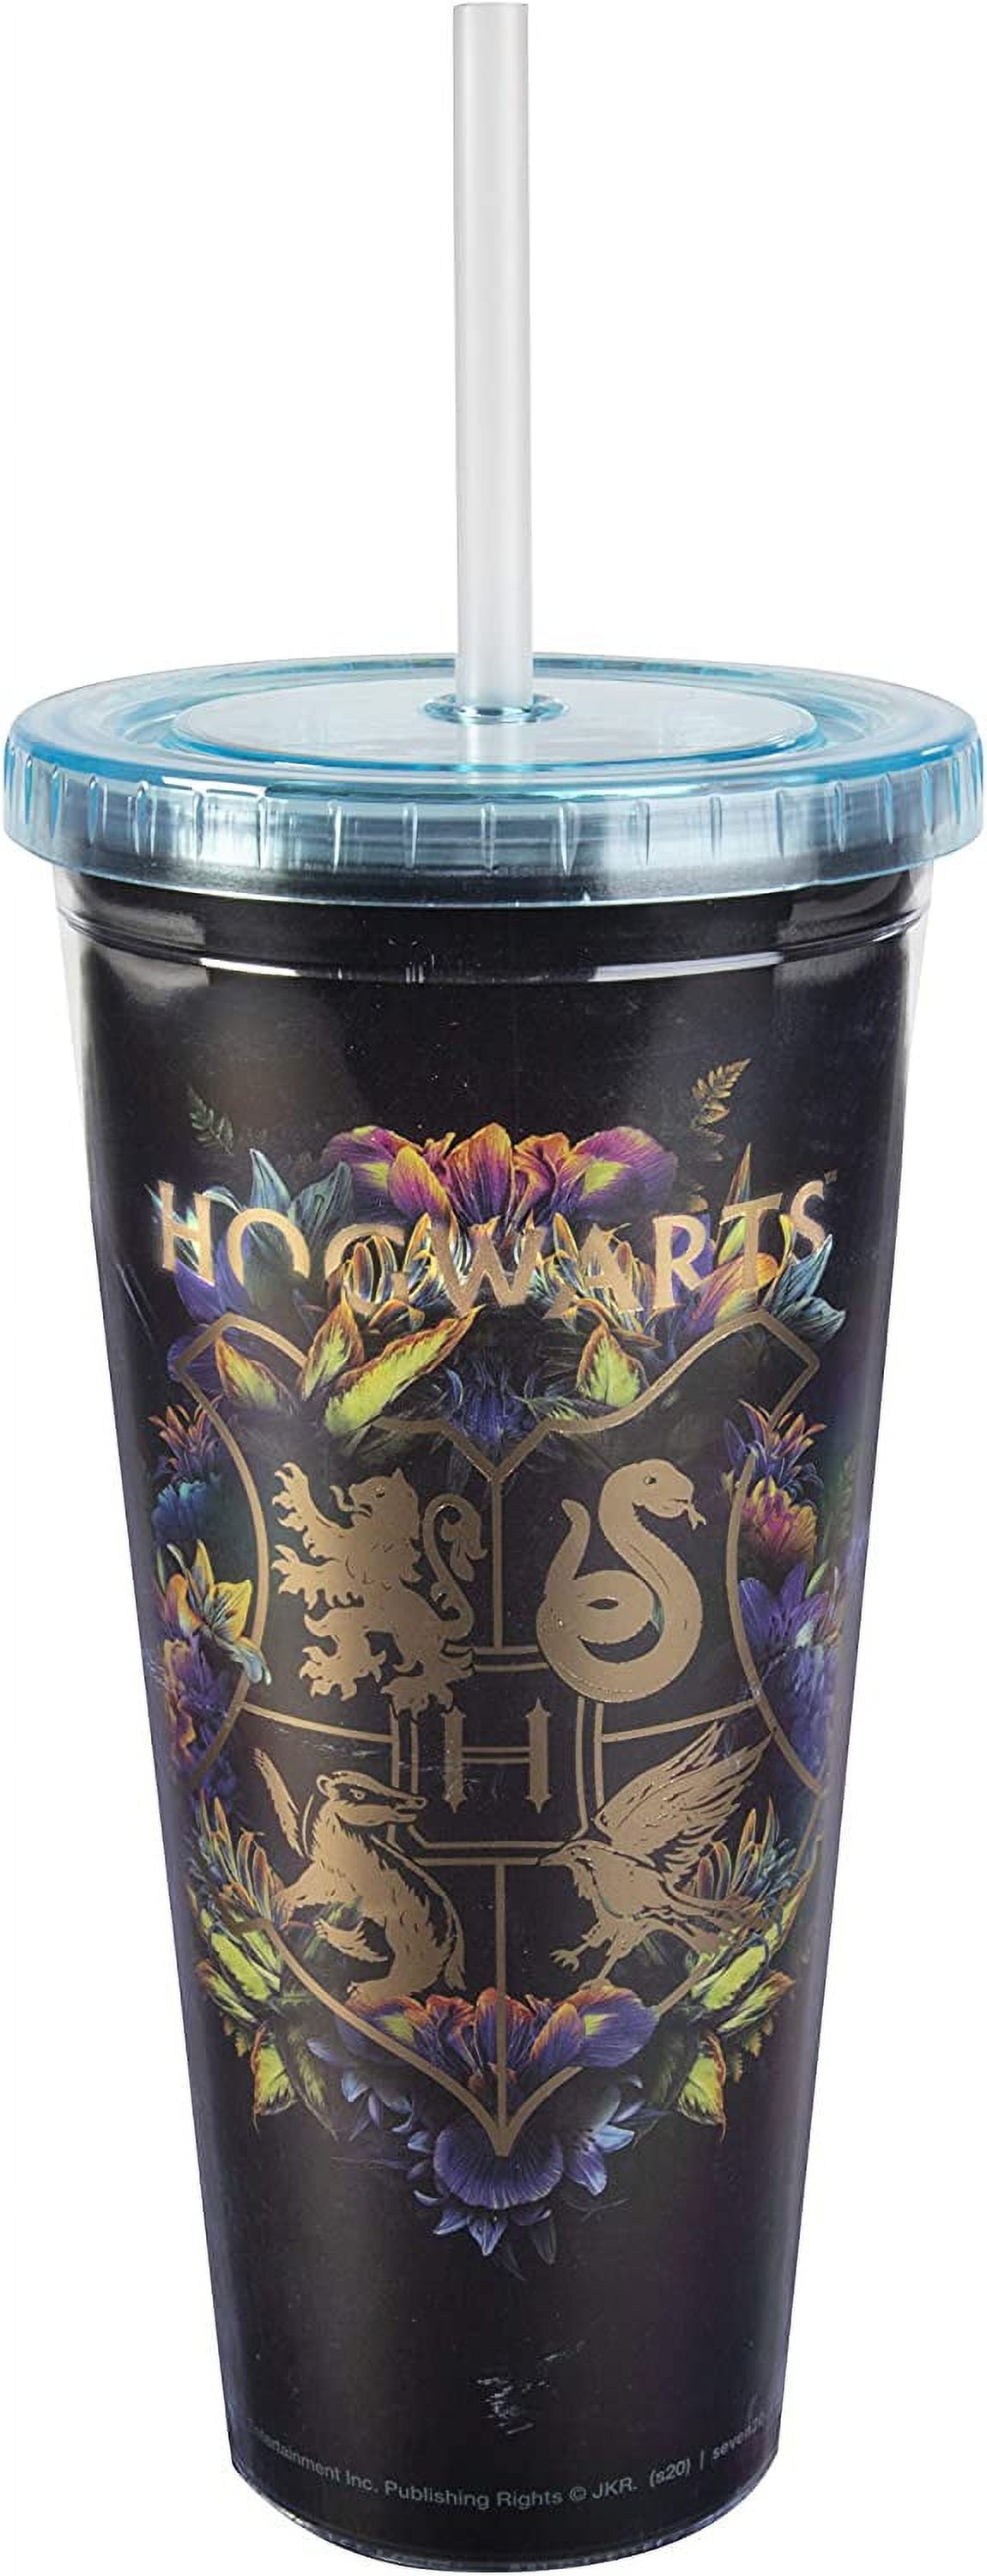 Warner Bros Hogwarts Harry Potter Tumbler Multi Glitter Acrylic With Straw